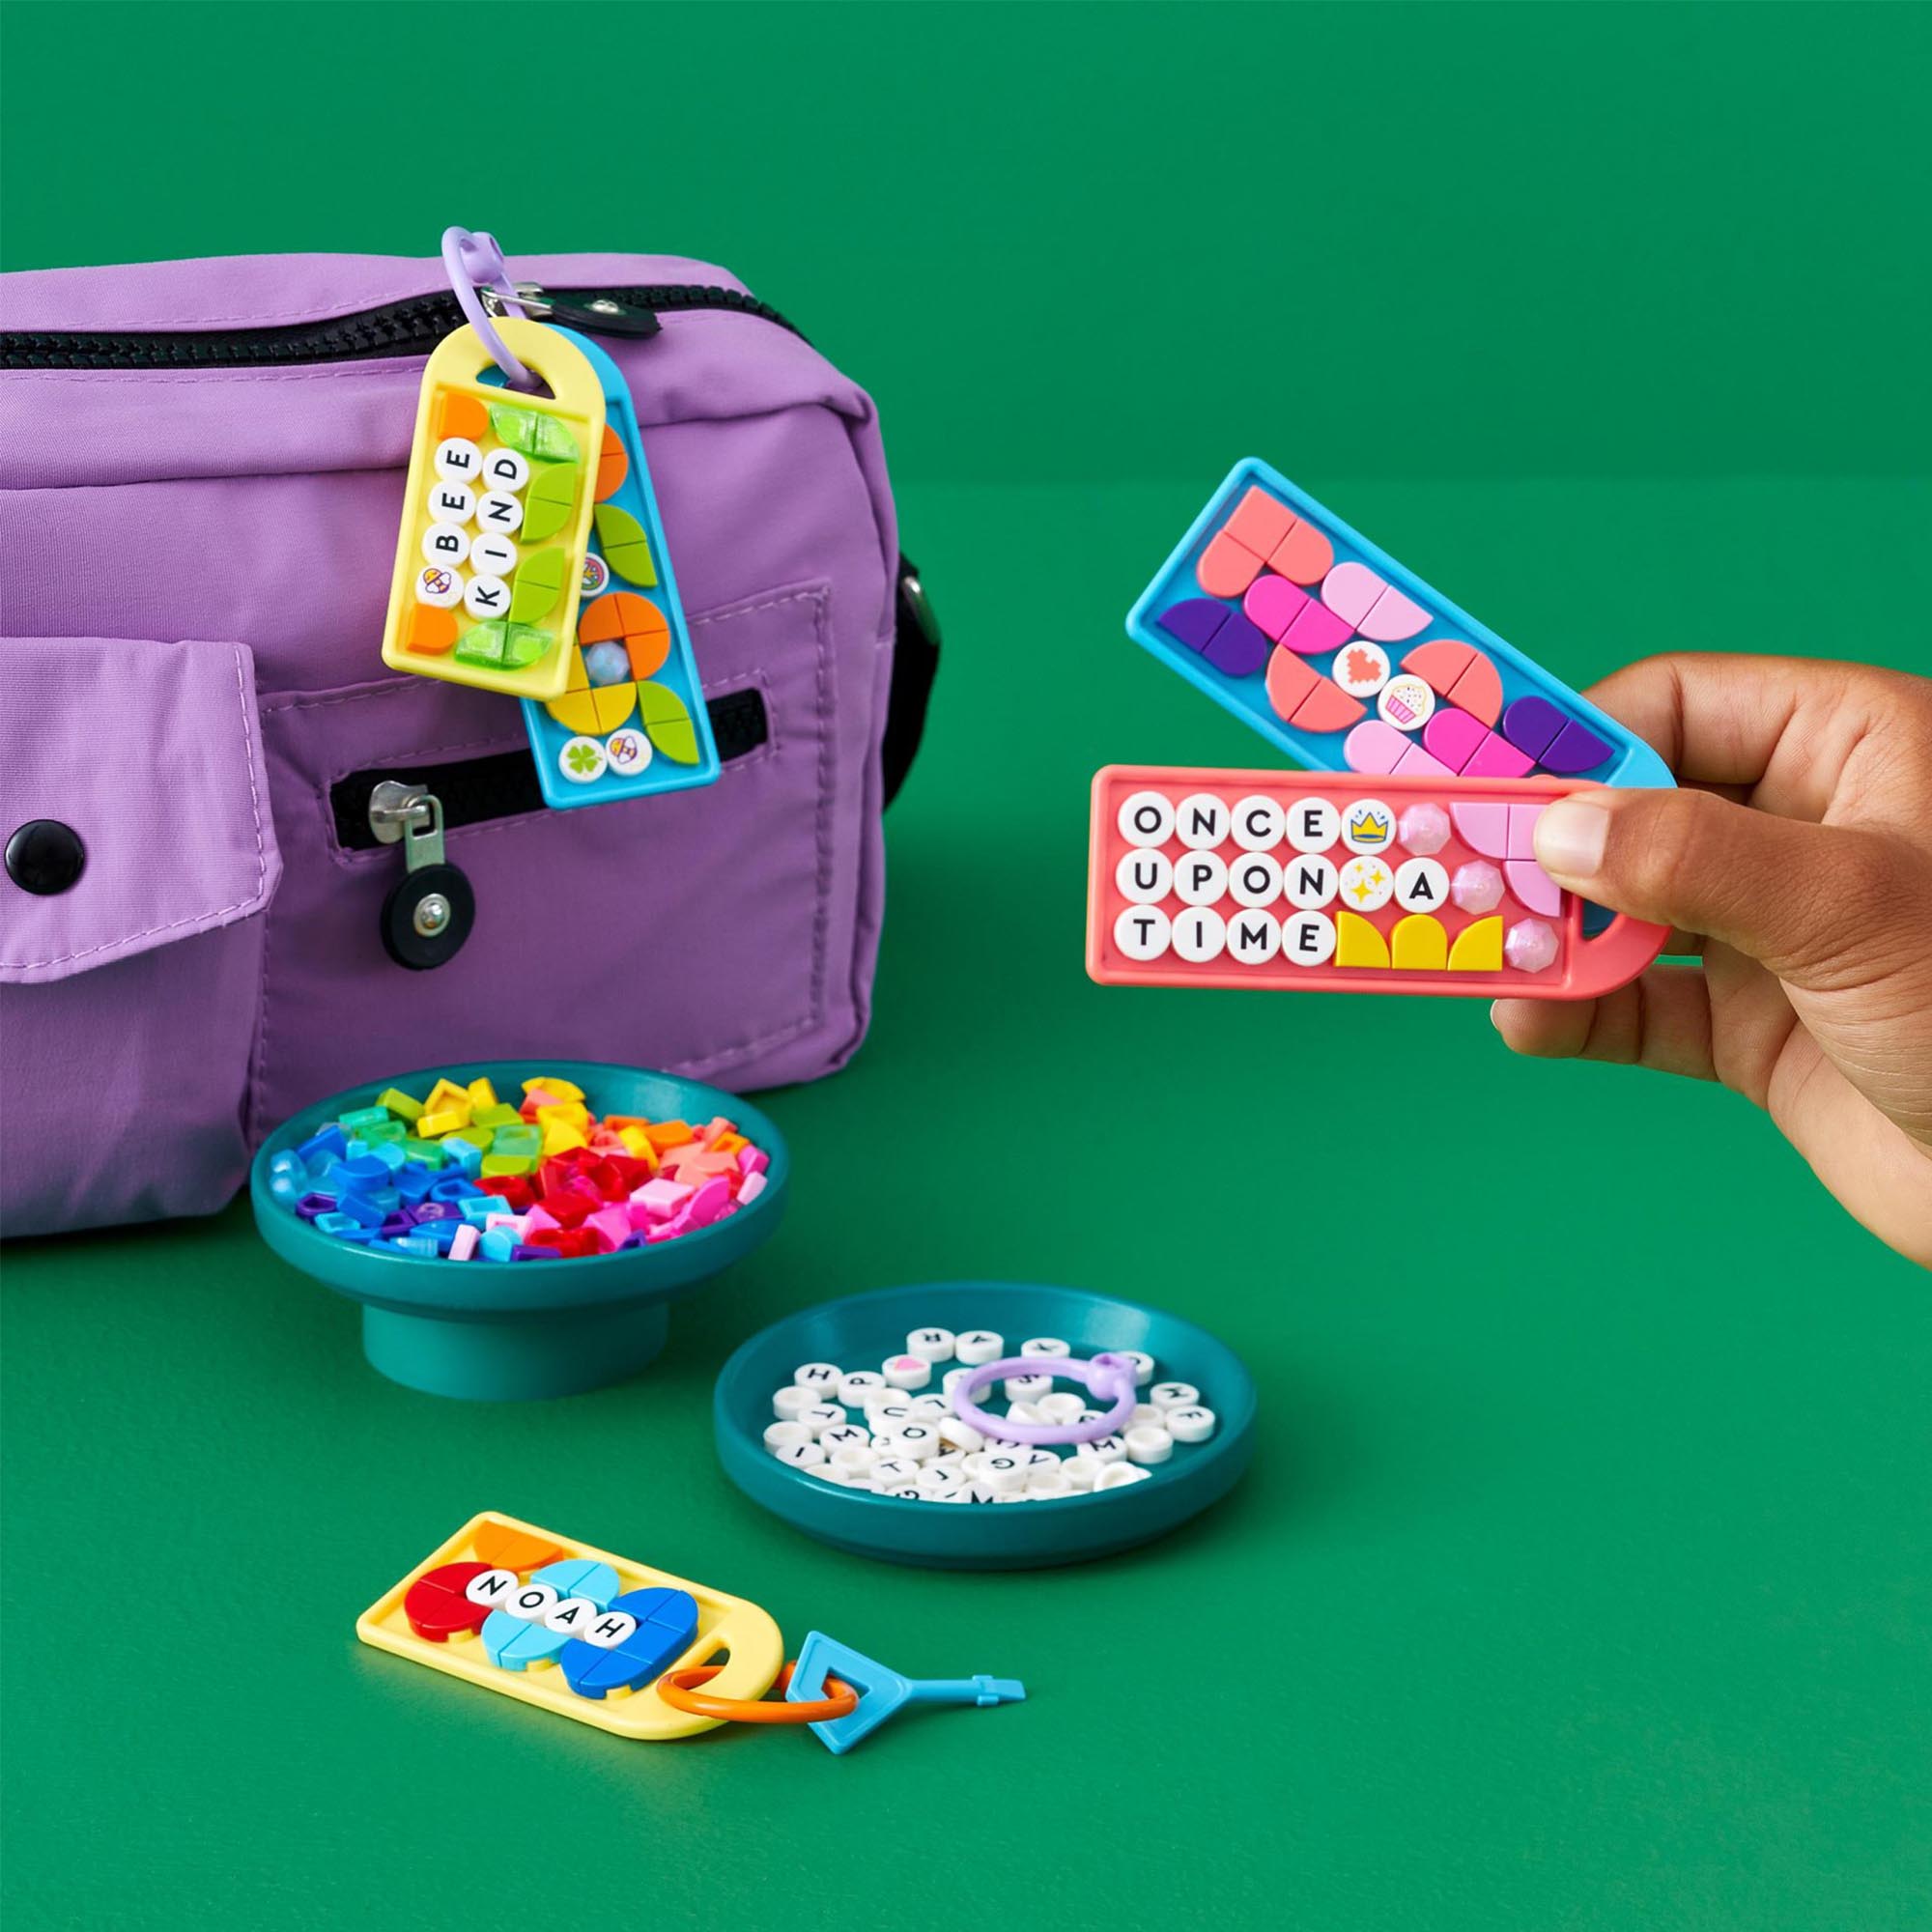 LEGO 41949 DOTS Multipack Bag Tag - Messaggi, Giocattolo Fai Da Te con Lettere,  41949, , large